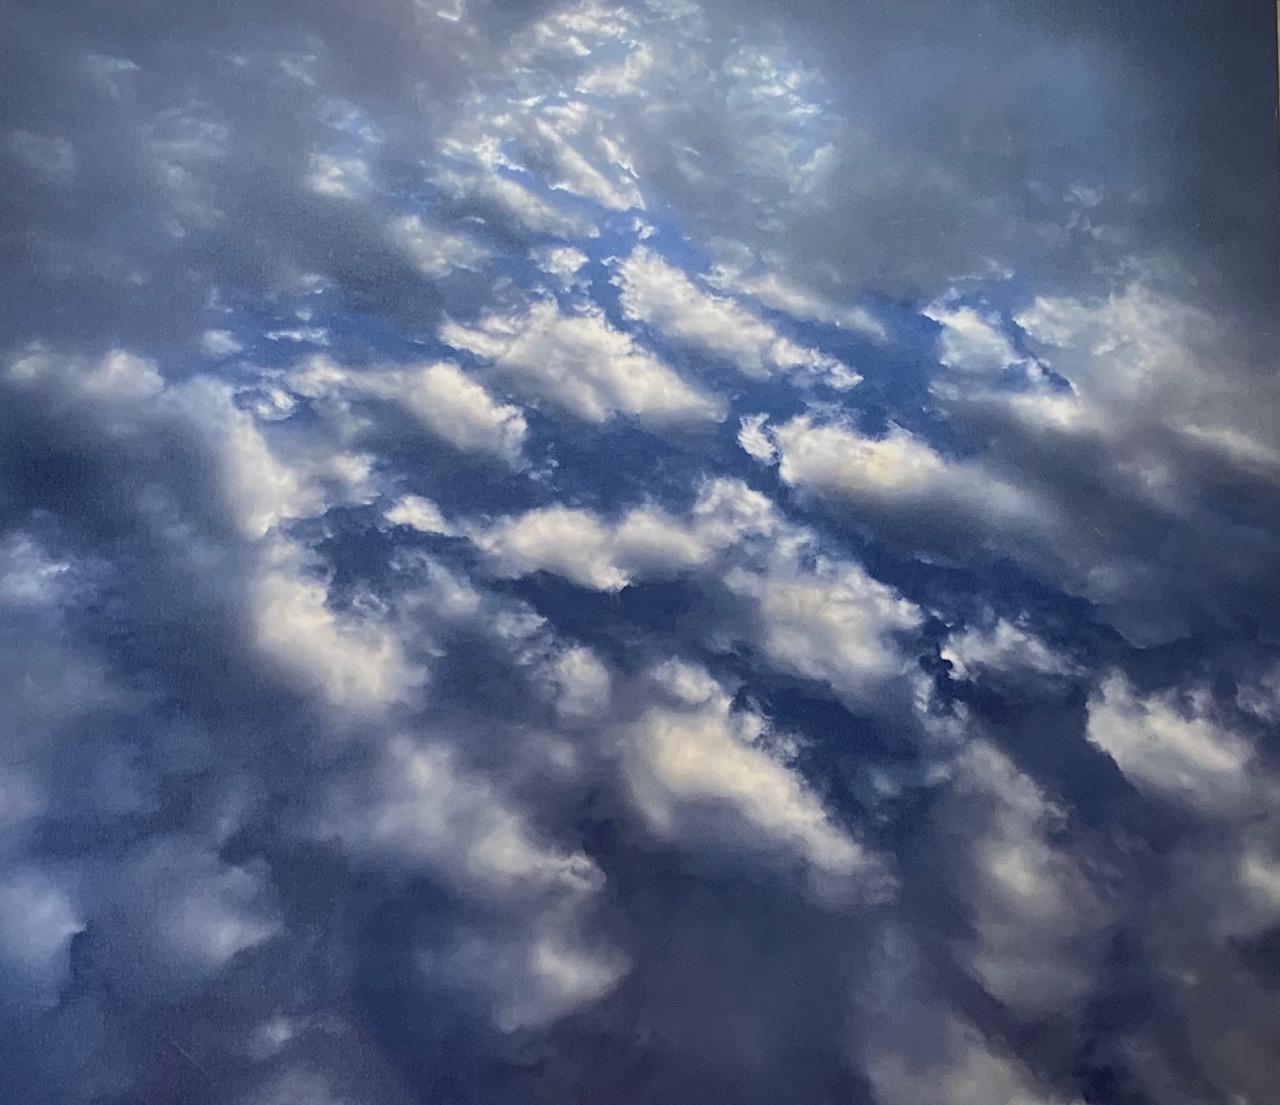 O Devan Landscape Photograph - "Cloudy sky" Photography on Canvas One of a Kind